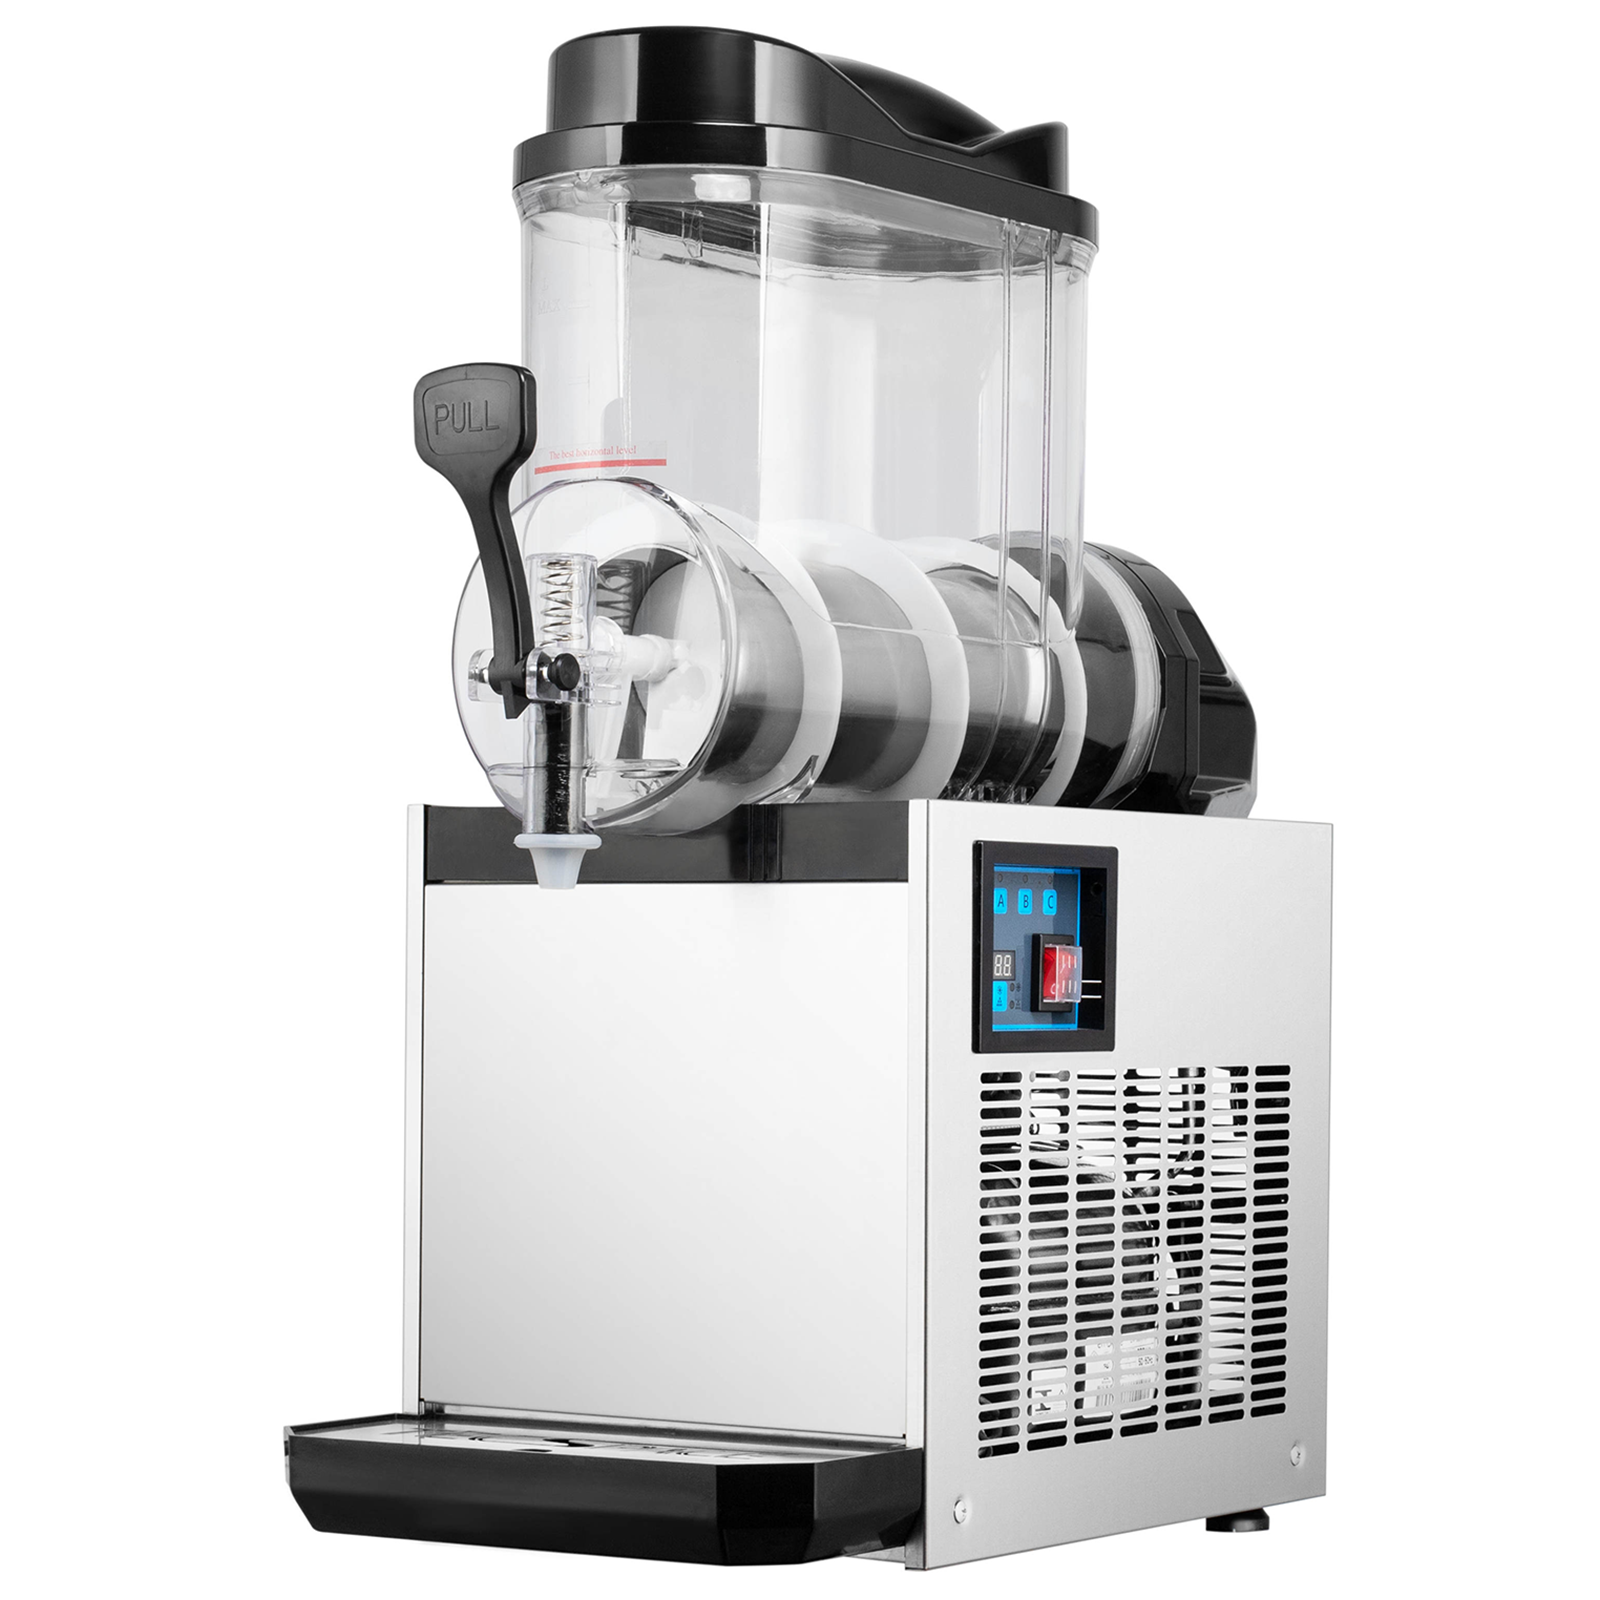 Leacco Commercial Slushie Machine, 15L Frozen Drink Margarita Machine Smoothie Slushy Maker 110V, 500W, 4 Gallon